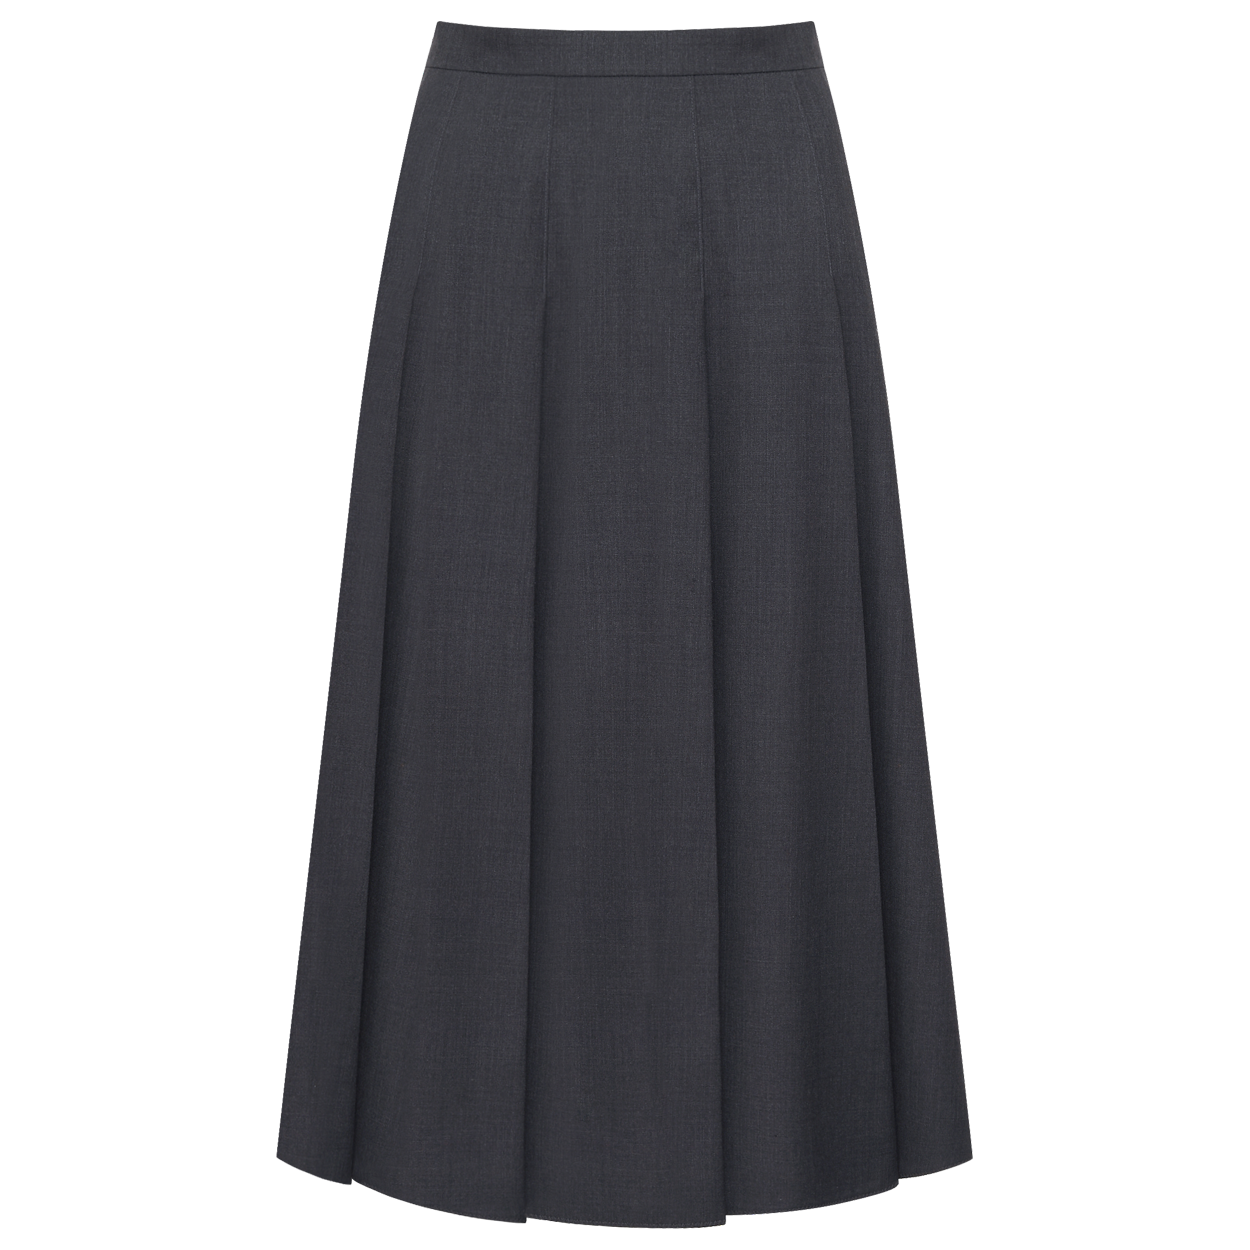 Mela pleats skirt (melange charcoal)